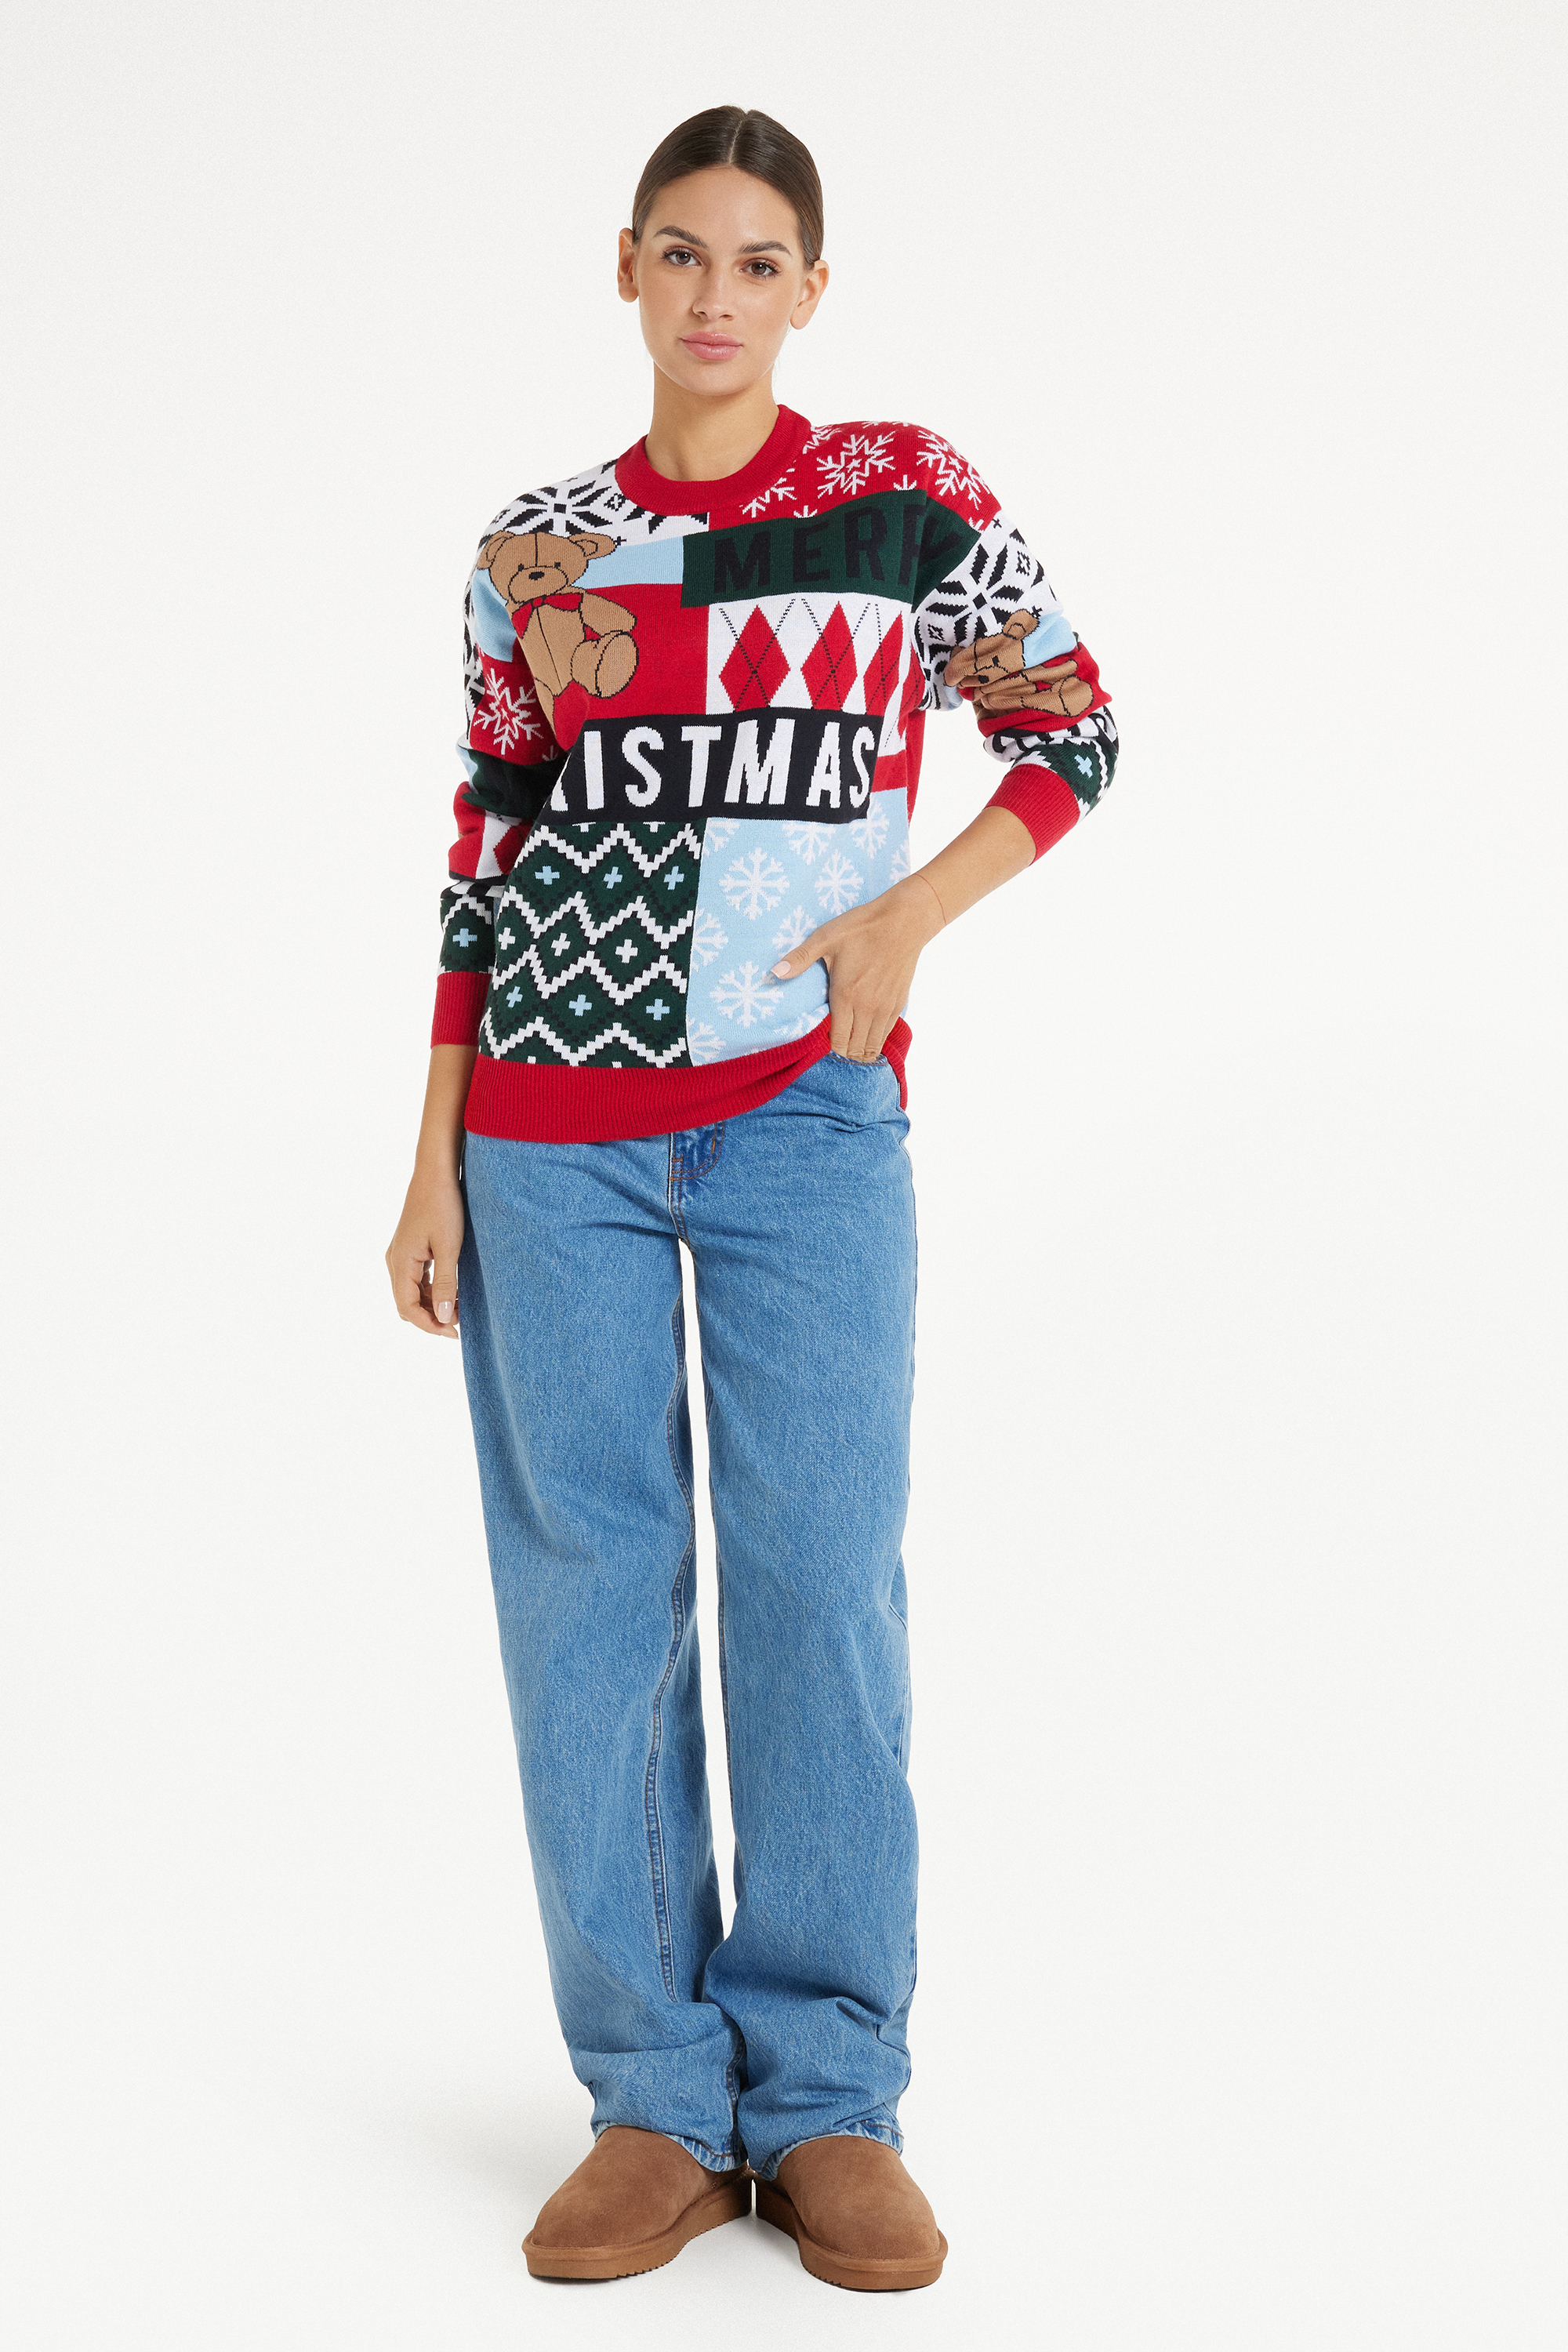 Unisex Long-Sleeve Christmas Sweater